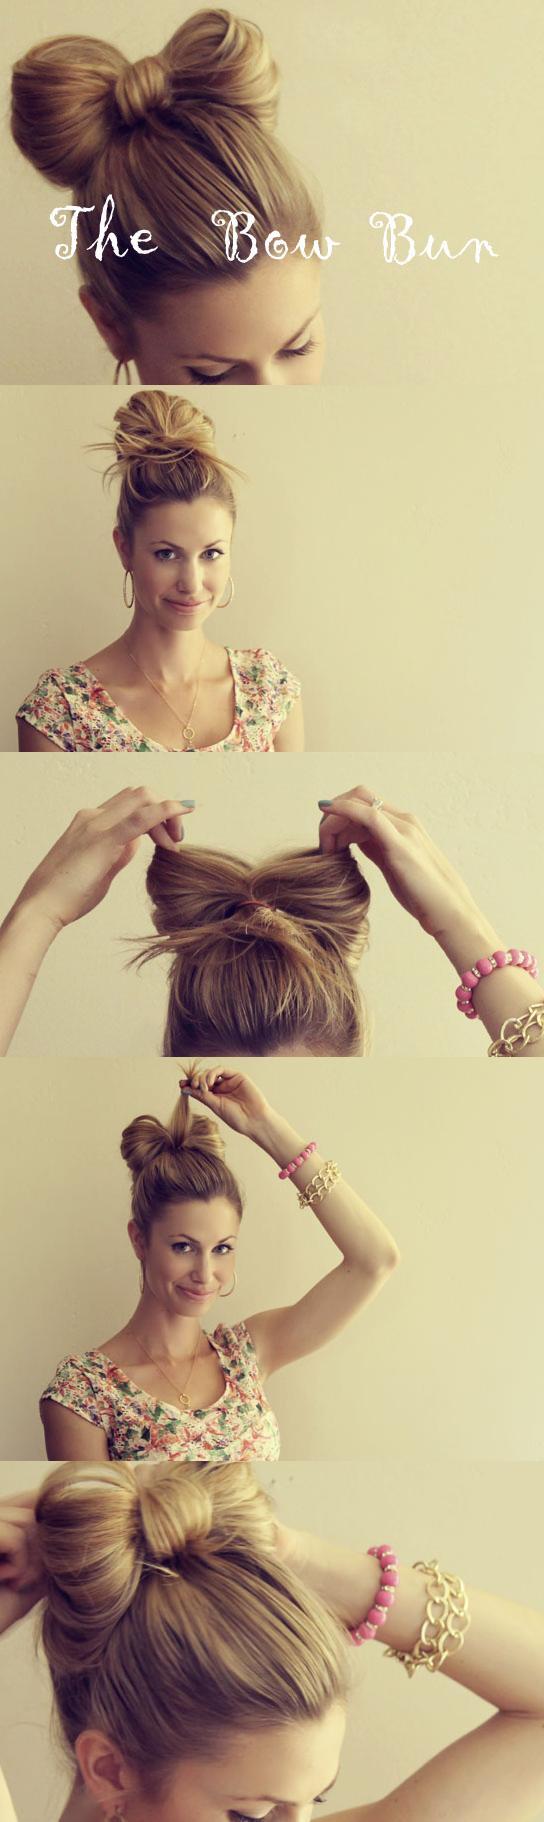 diy-hair-bow-bun-tutorial-gorgeous-wedding-hair.jpg